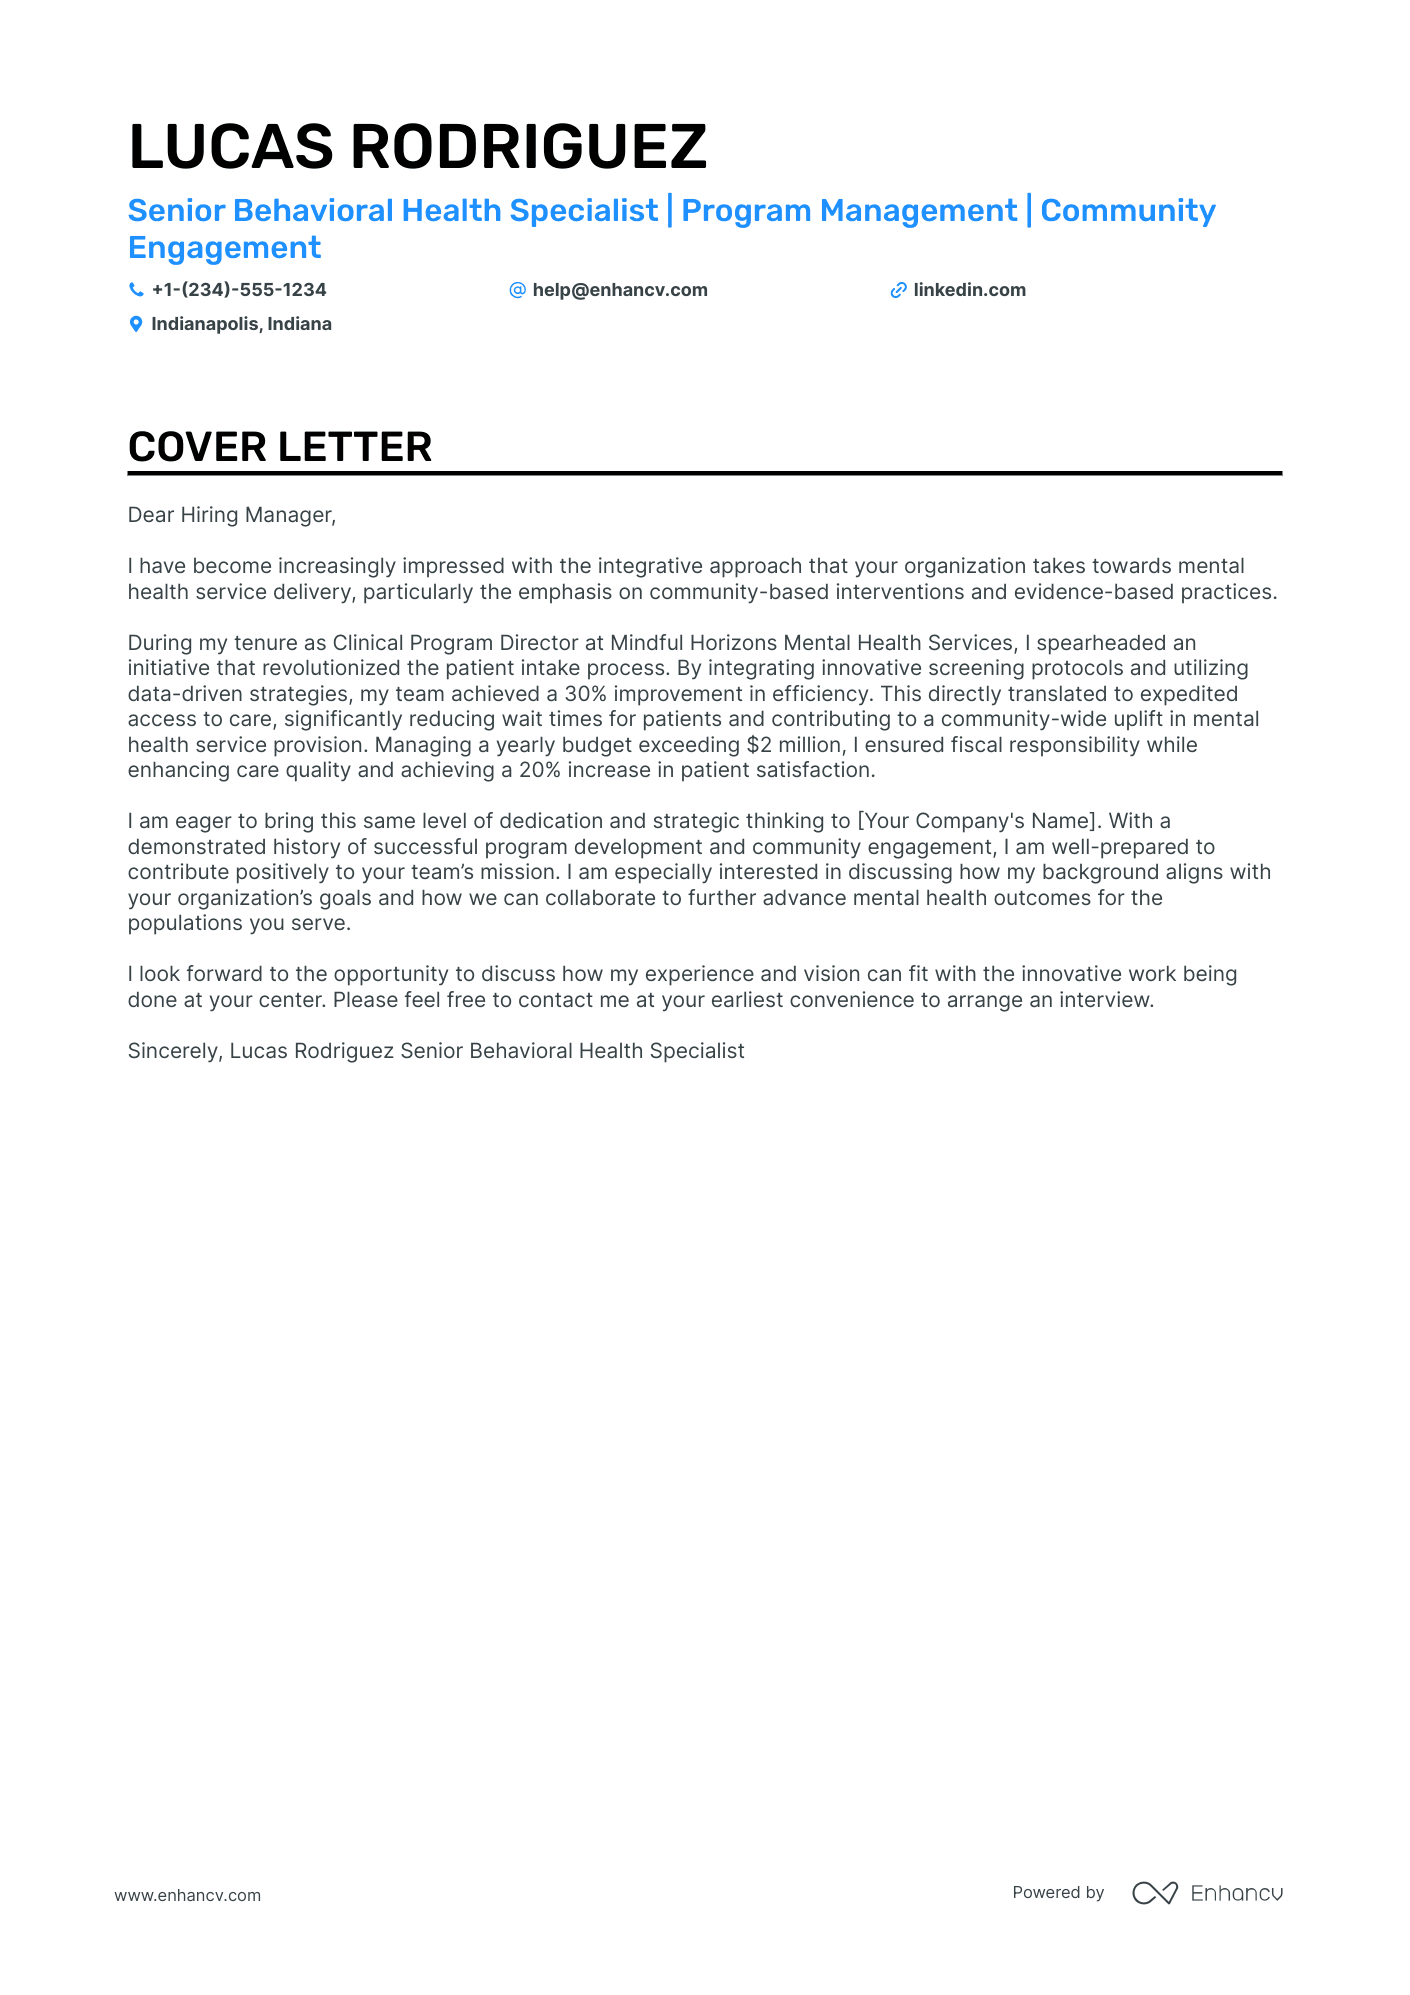 Mental Health Program Manager cover letter